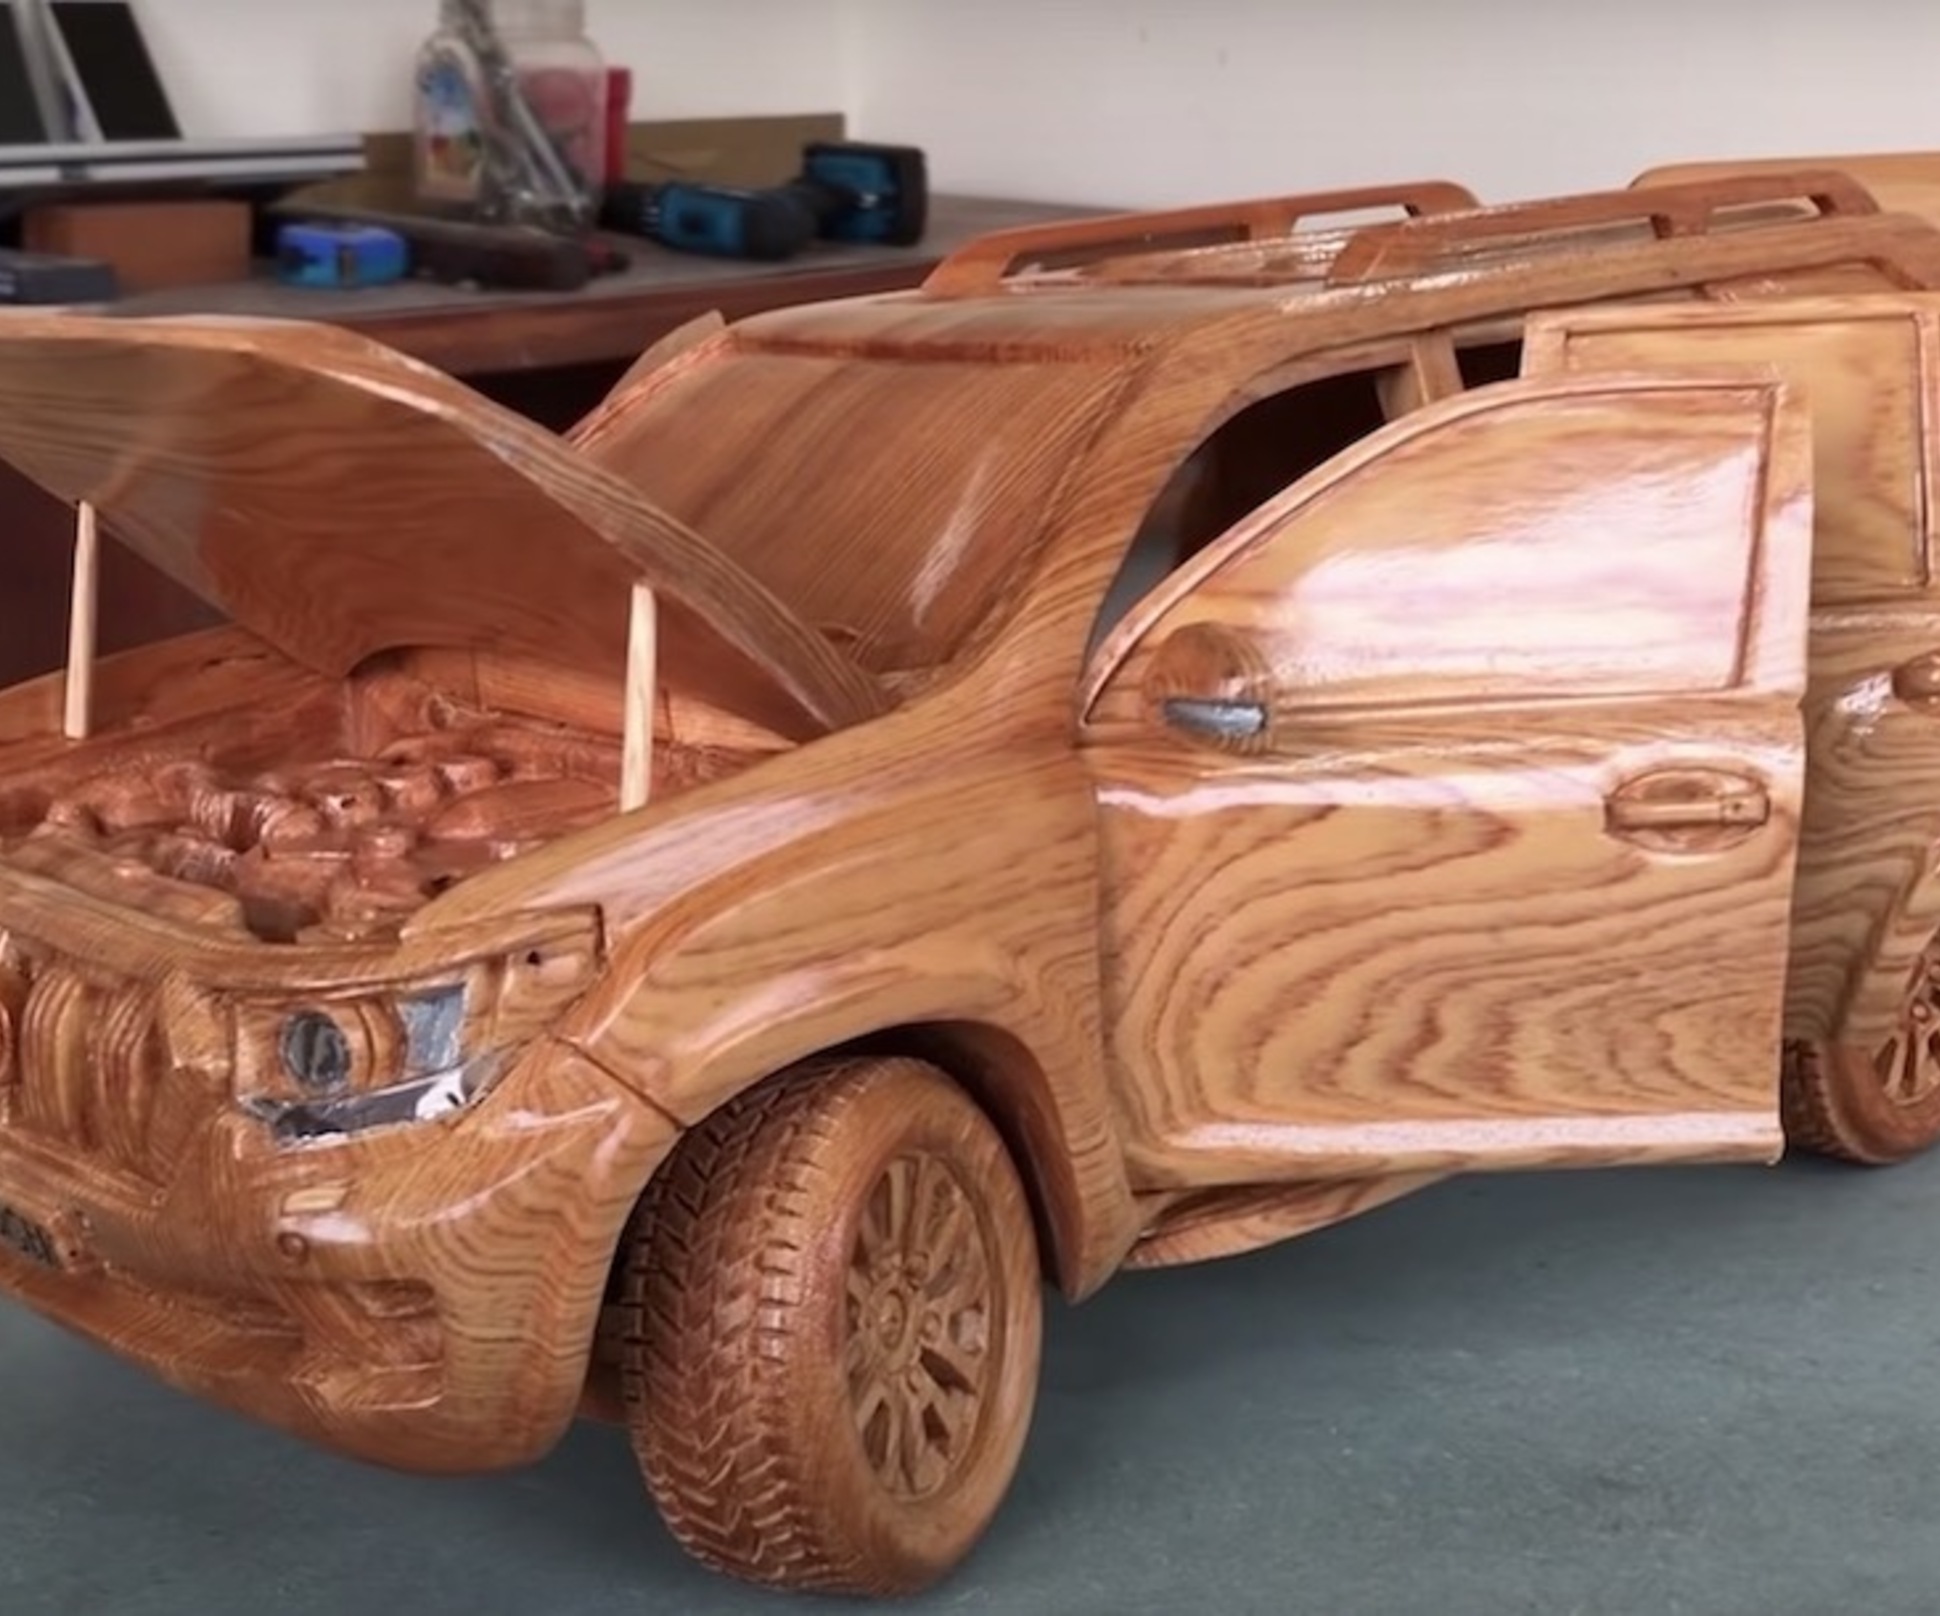 Toyota Prado Land Cruiser Woodworking